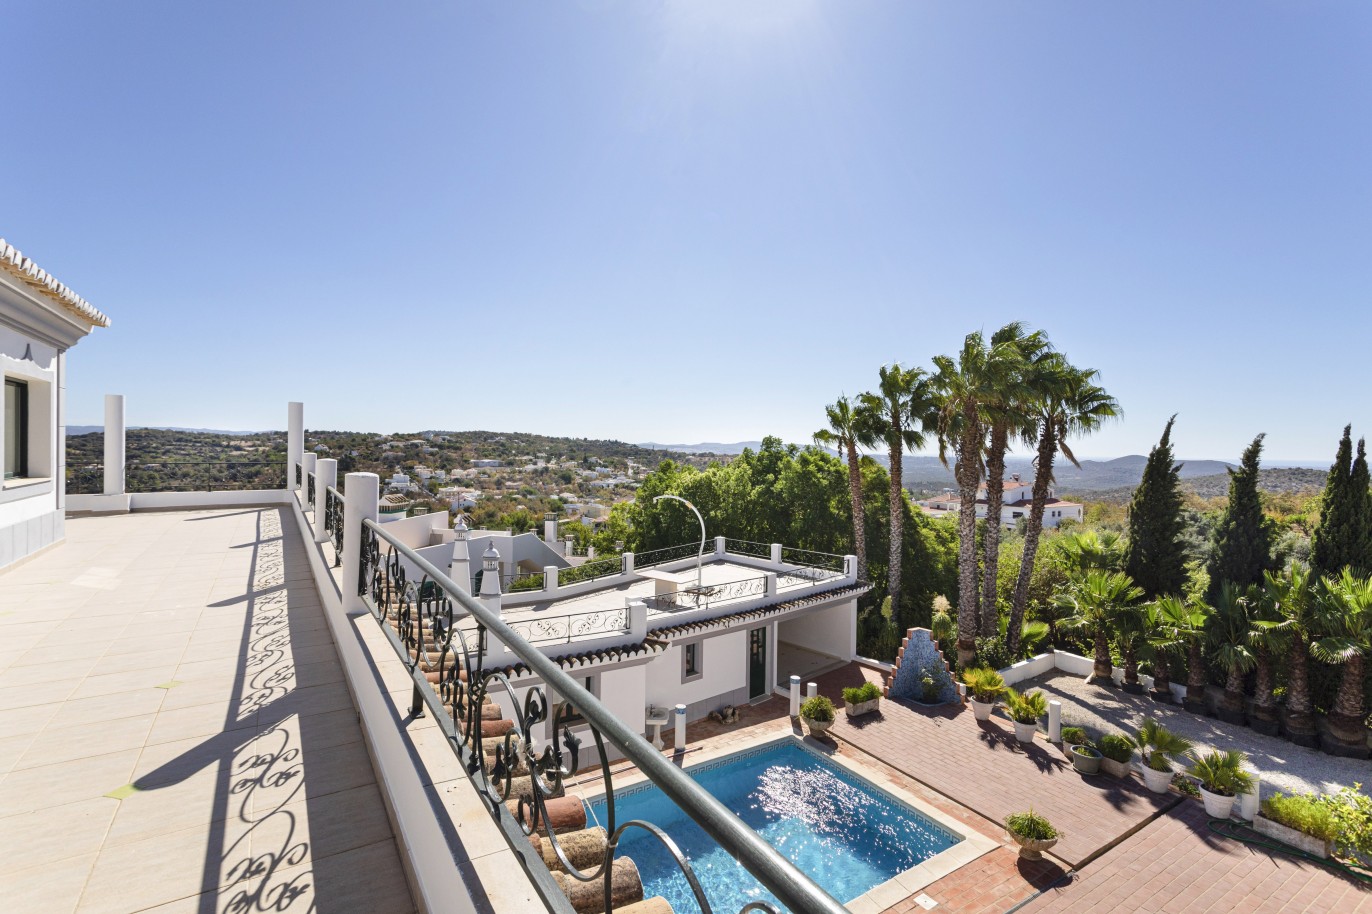 Villa for sale, pool, sea and mountain views, Loulé, Algarve, Portugal_236422